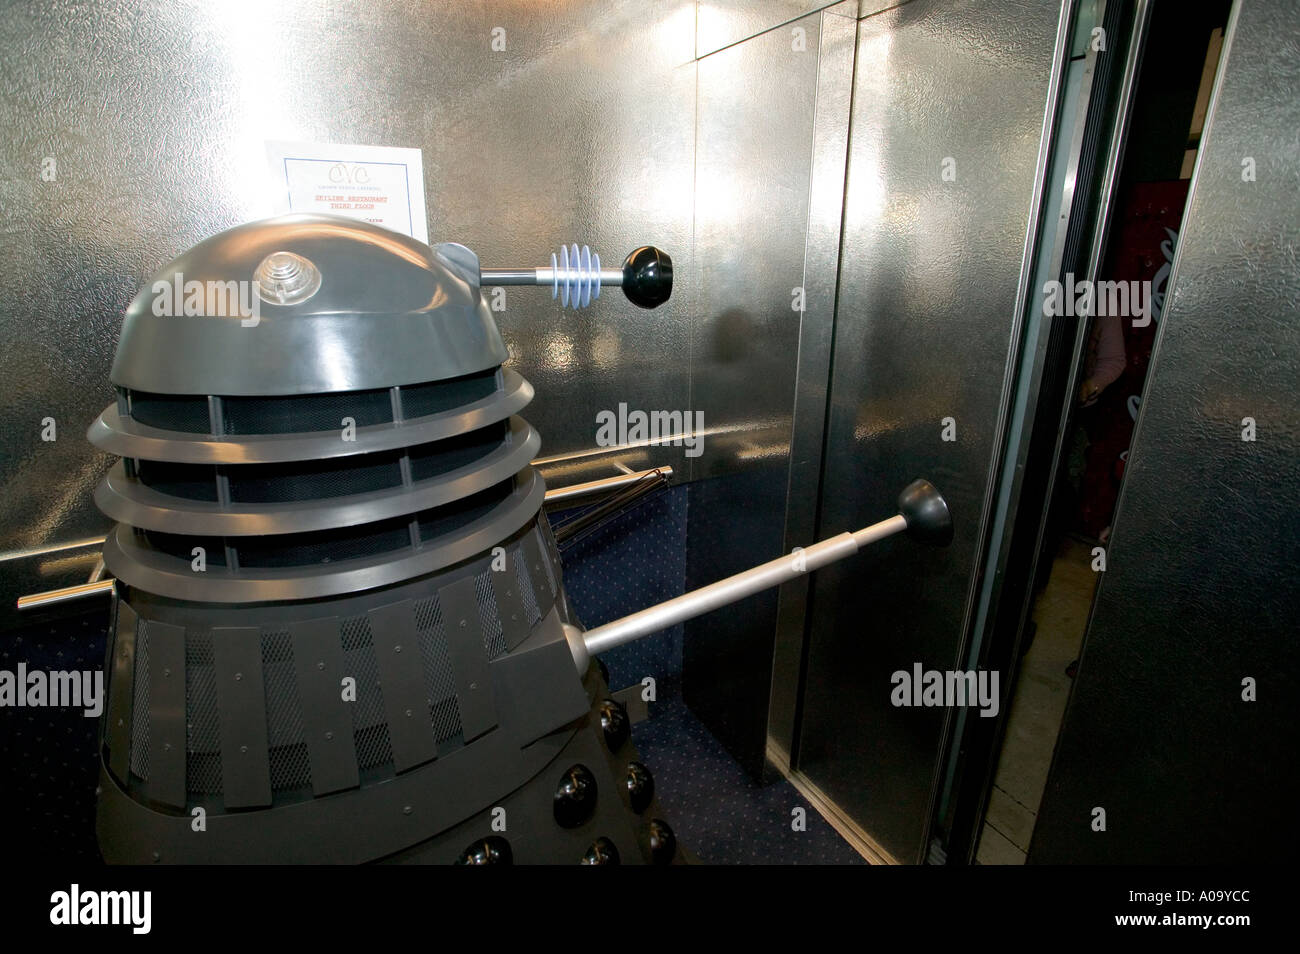 Dalek in a lift Stock Photo